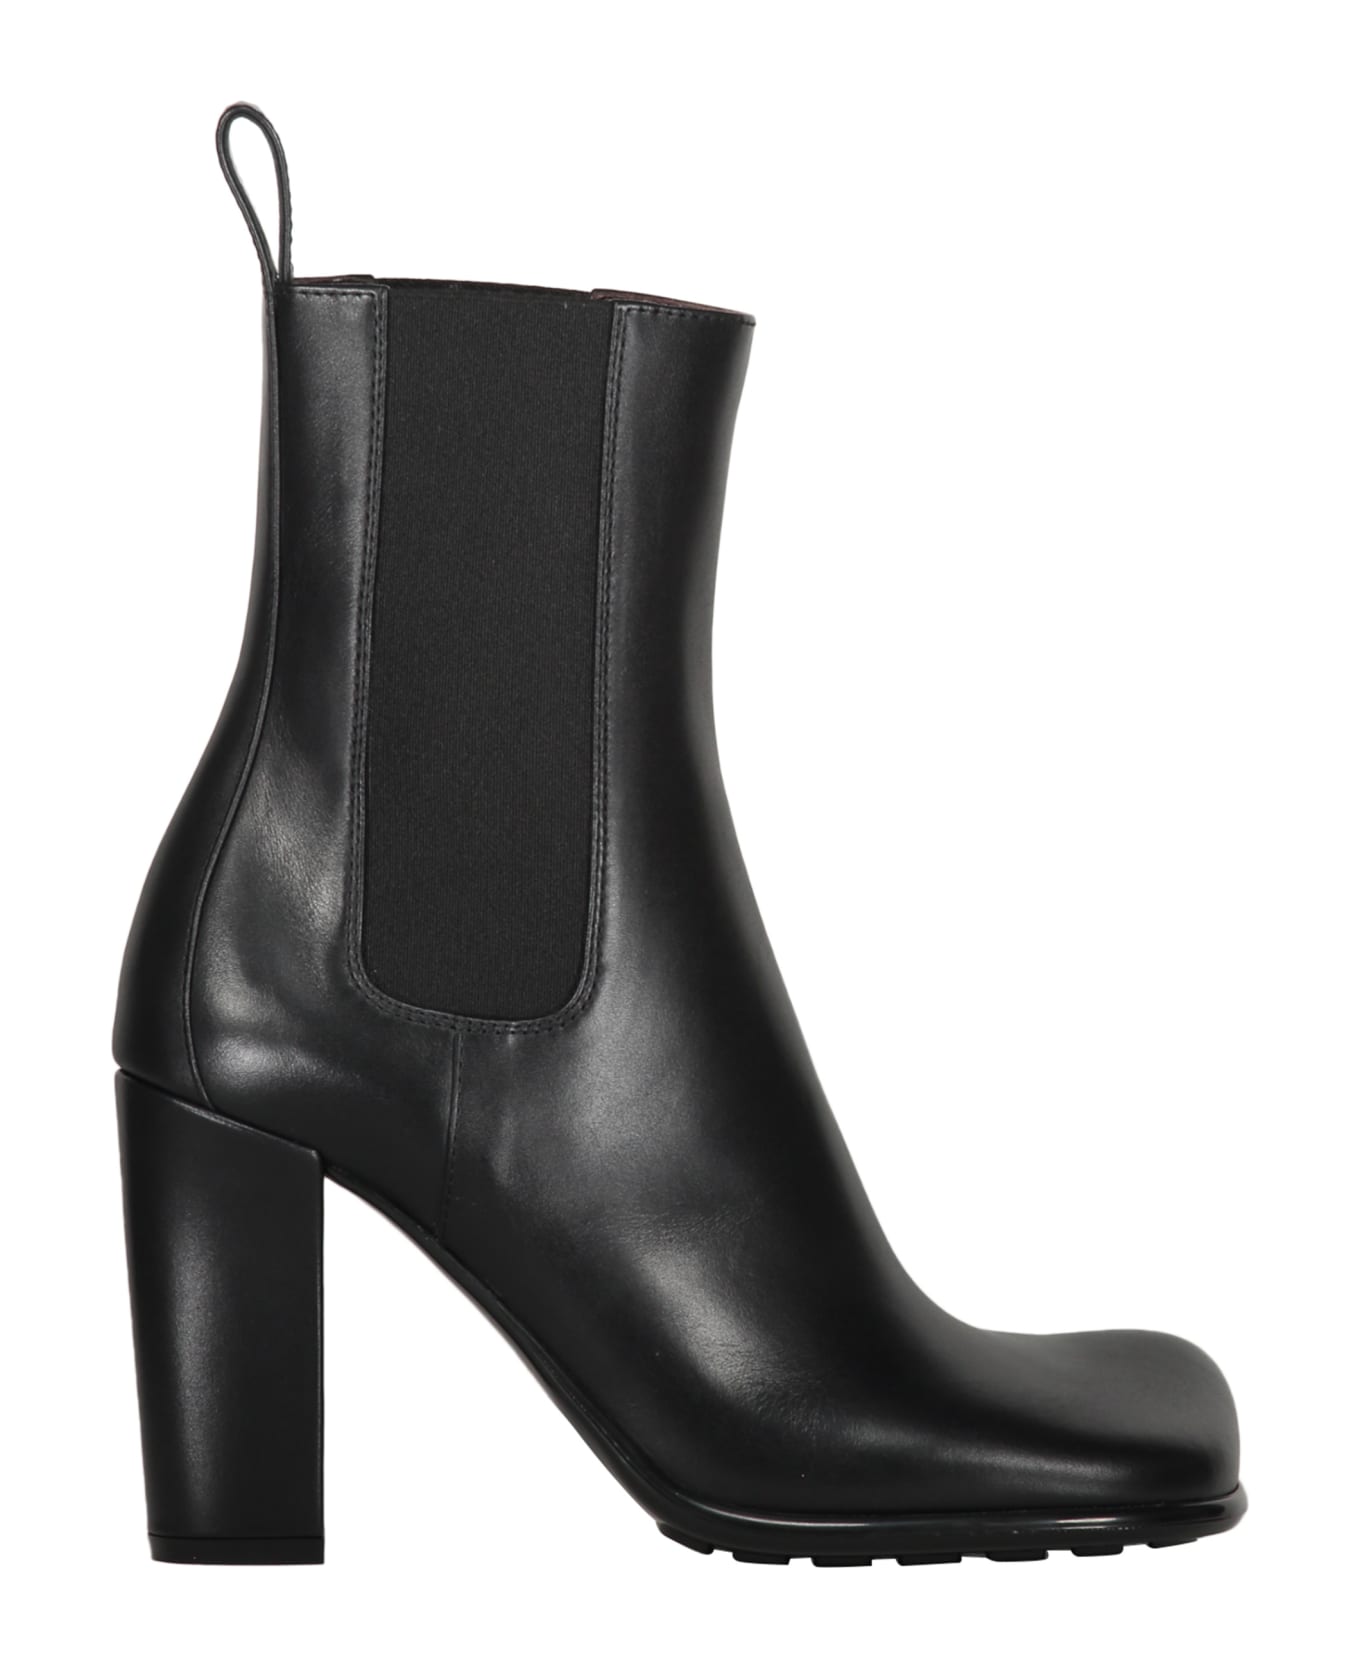 Bottega Veneta Storm Leather Ankle Boots - black ブーツ